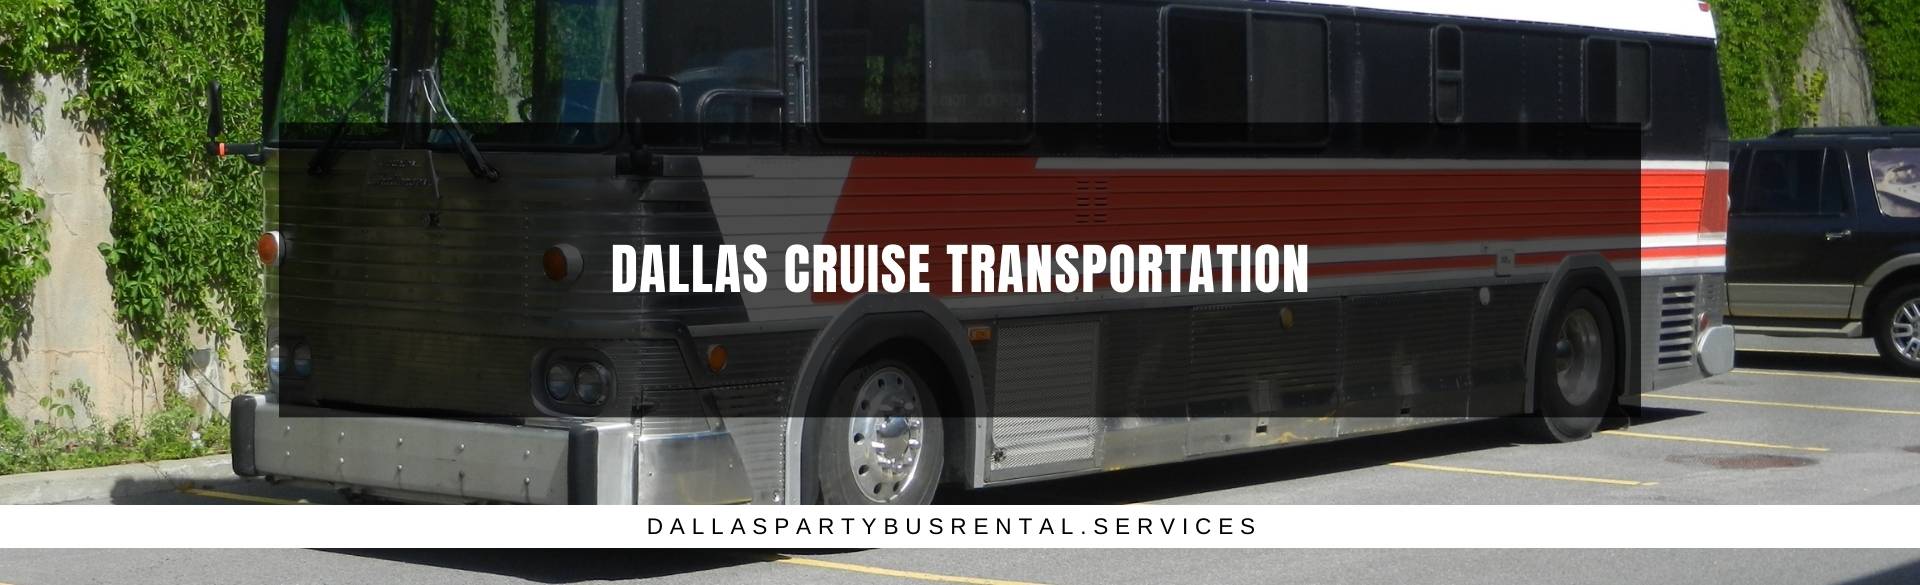 Dallas Cruise Transportation